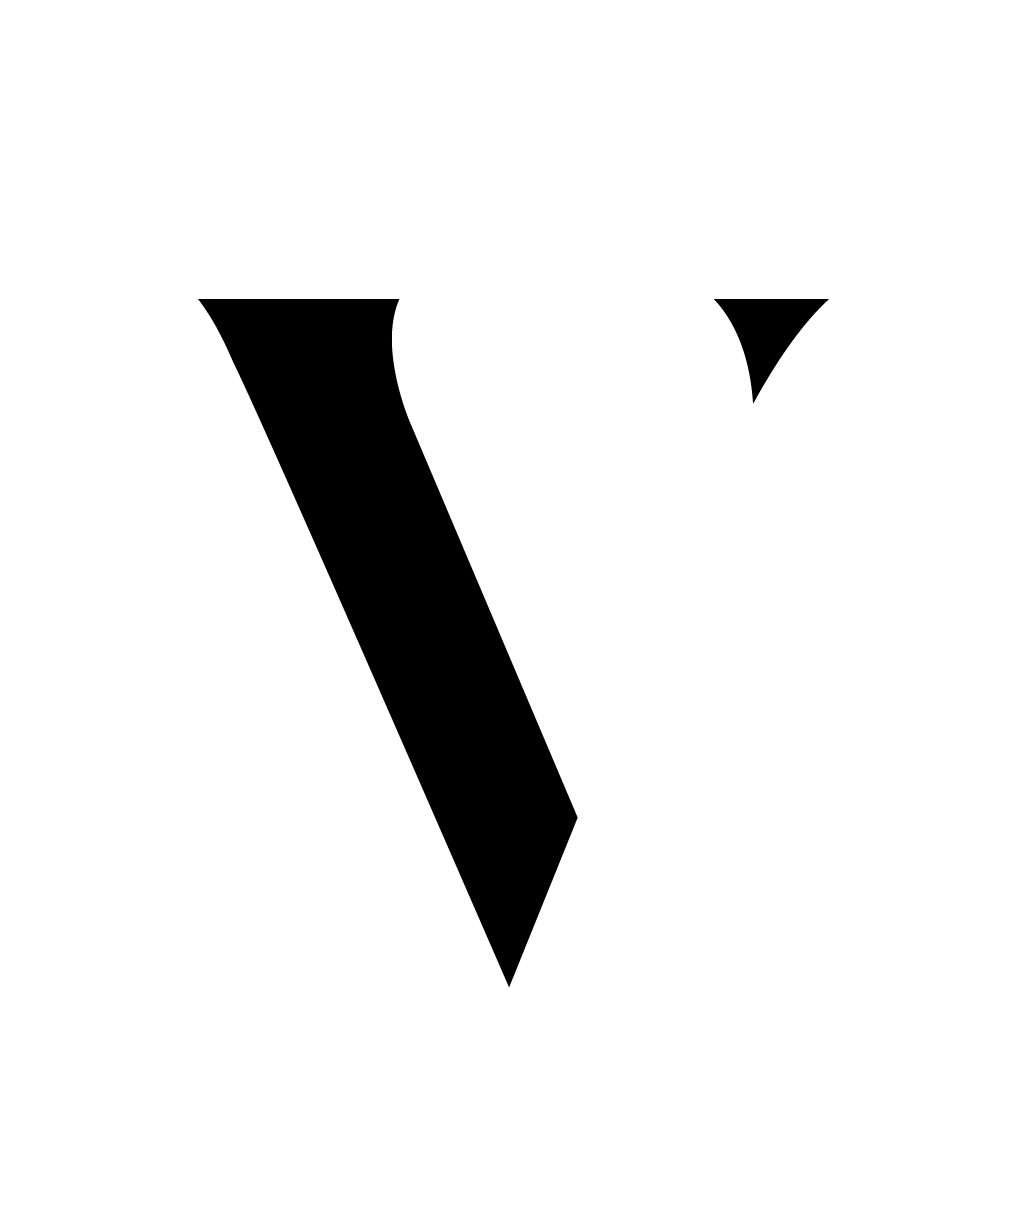 Логотип v. Буква v. Логотип с буквой v. Дизайн буквы v.